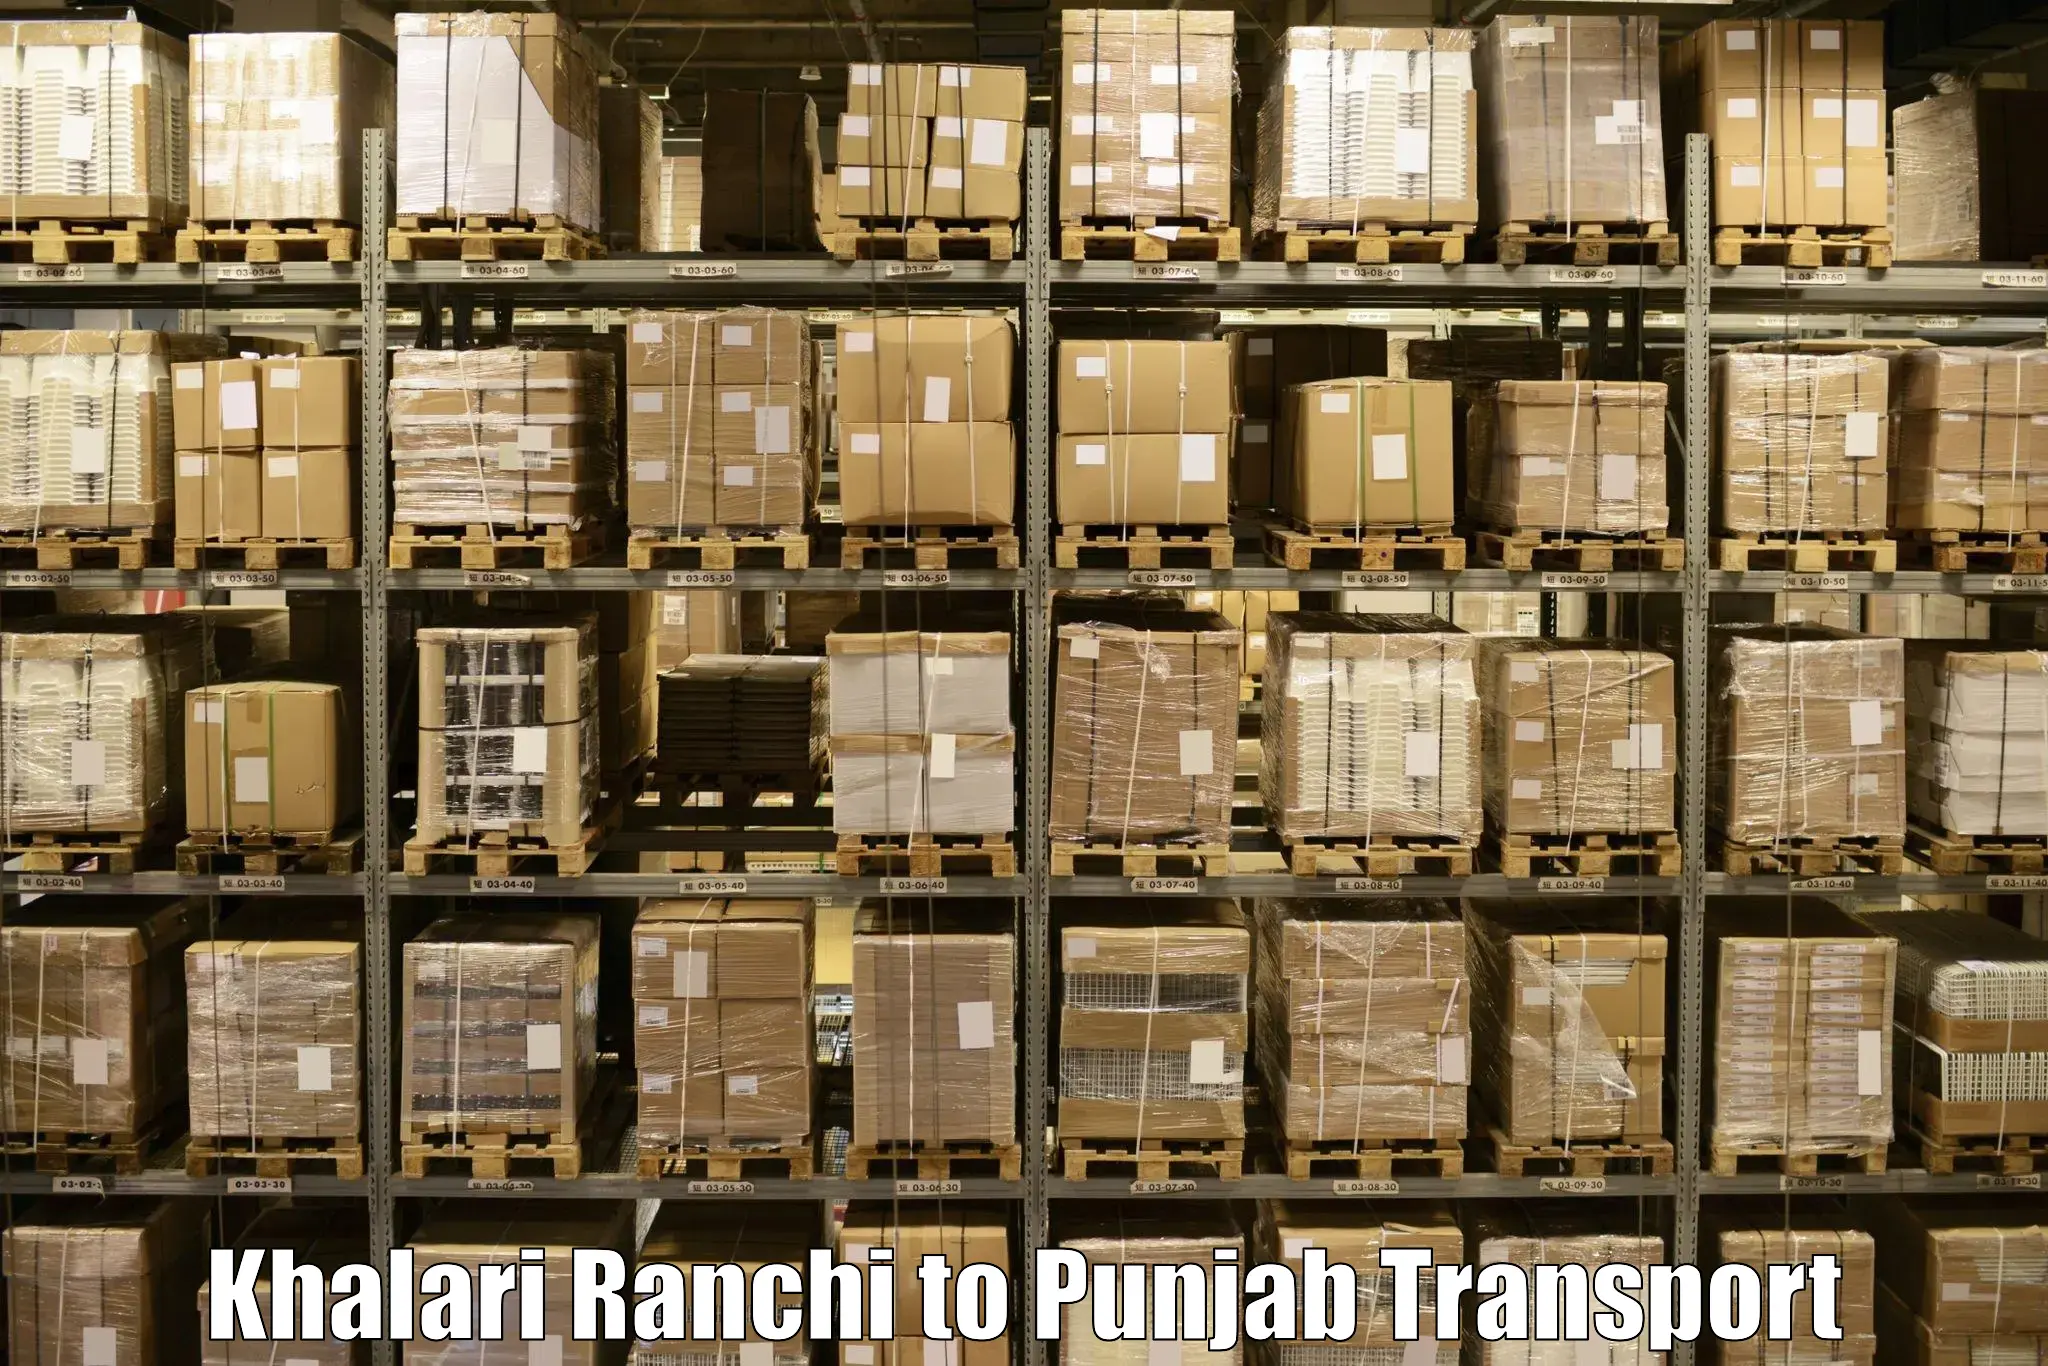 Nearby transport service Khalari Ranchi to Zirakpur